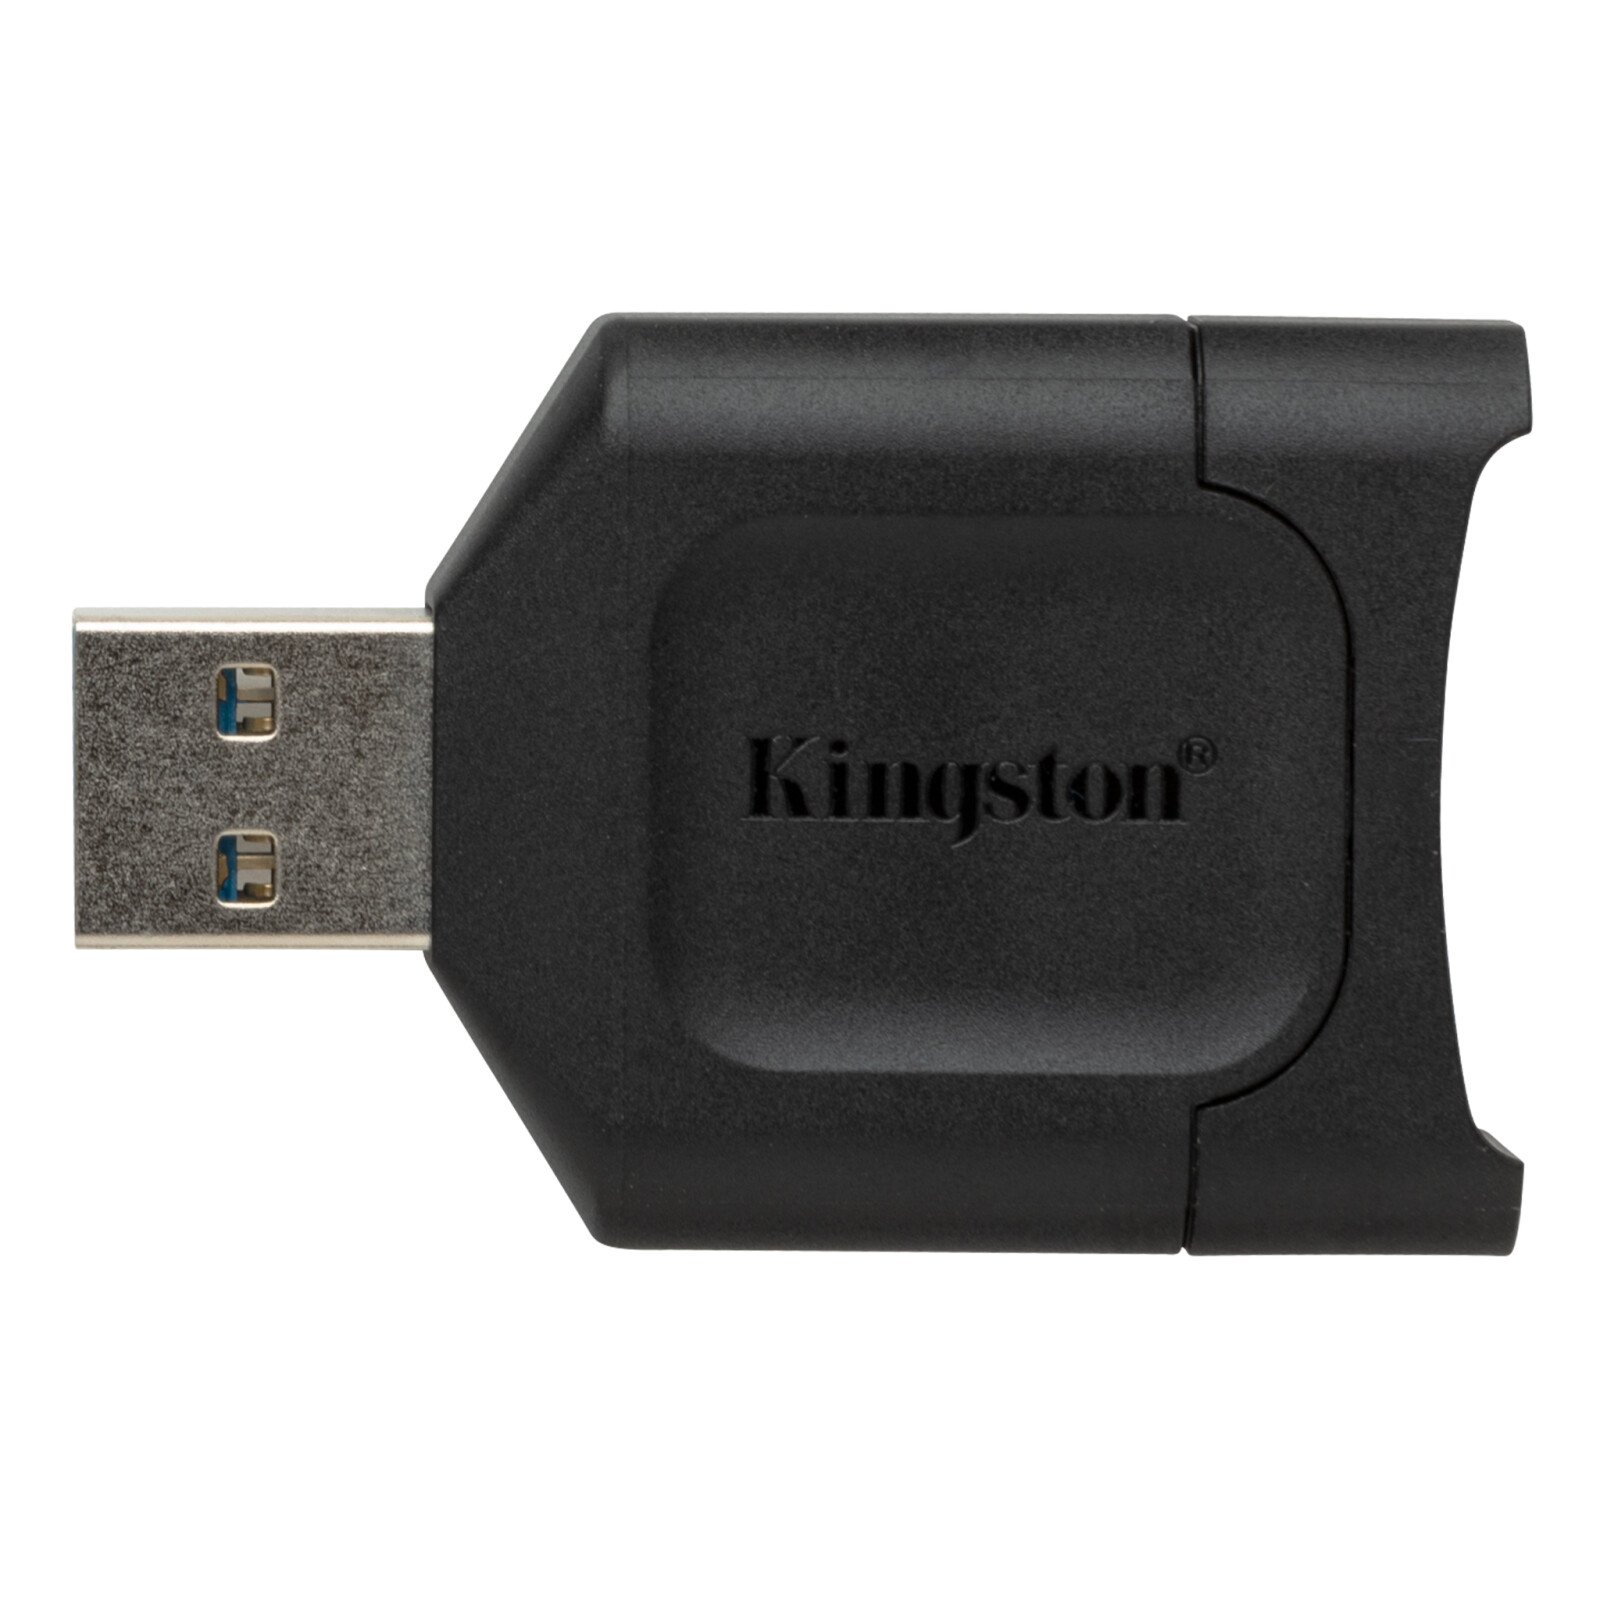 CARD READER extern KINGSTON, interfata USB 3.0, citeste/scrie: SD, micro SD, plastic, negru, "MLP" (timbru verde 0.03 lei) thumb